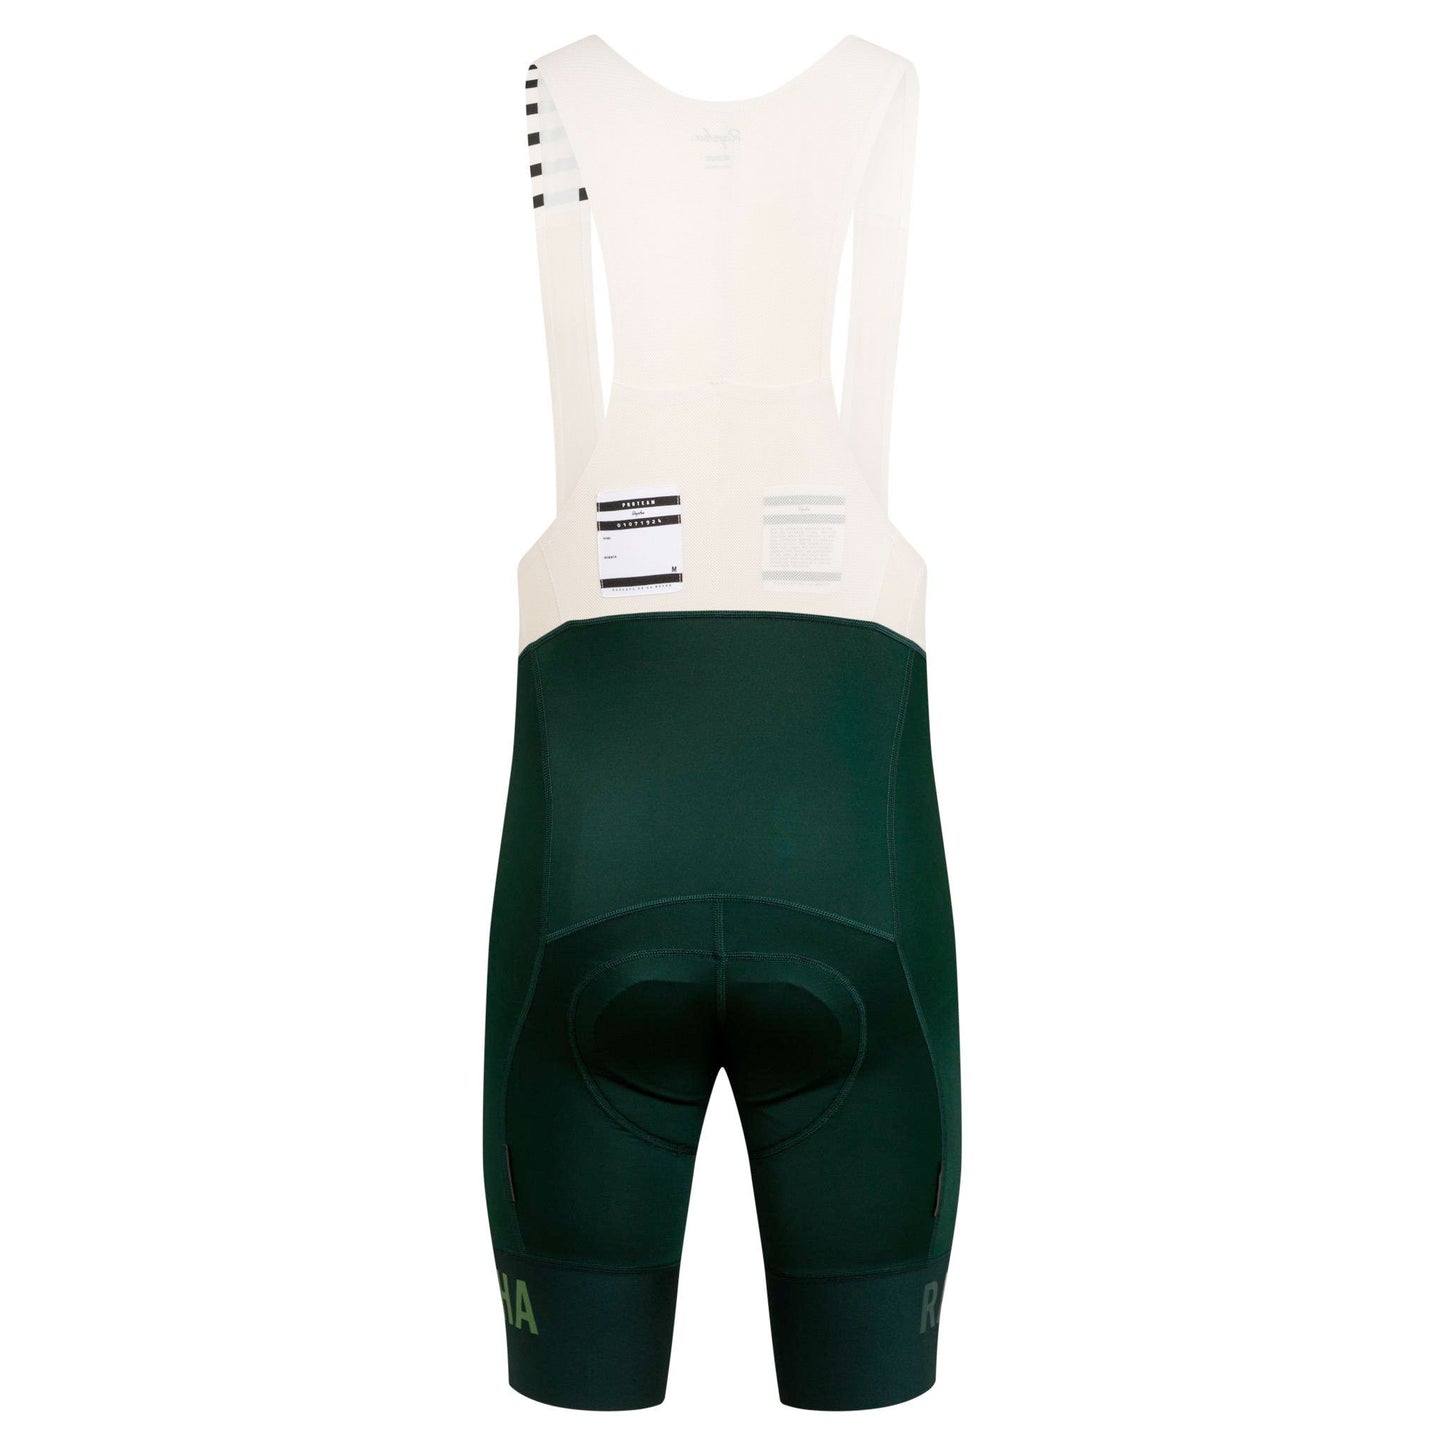 Rapha Mens Pro Team Bib Shorts - Regular, Dark Green/Off White